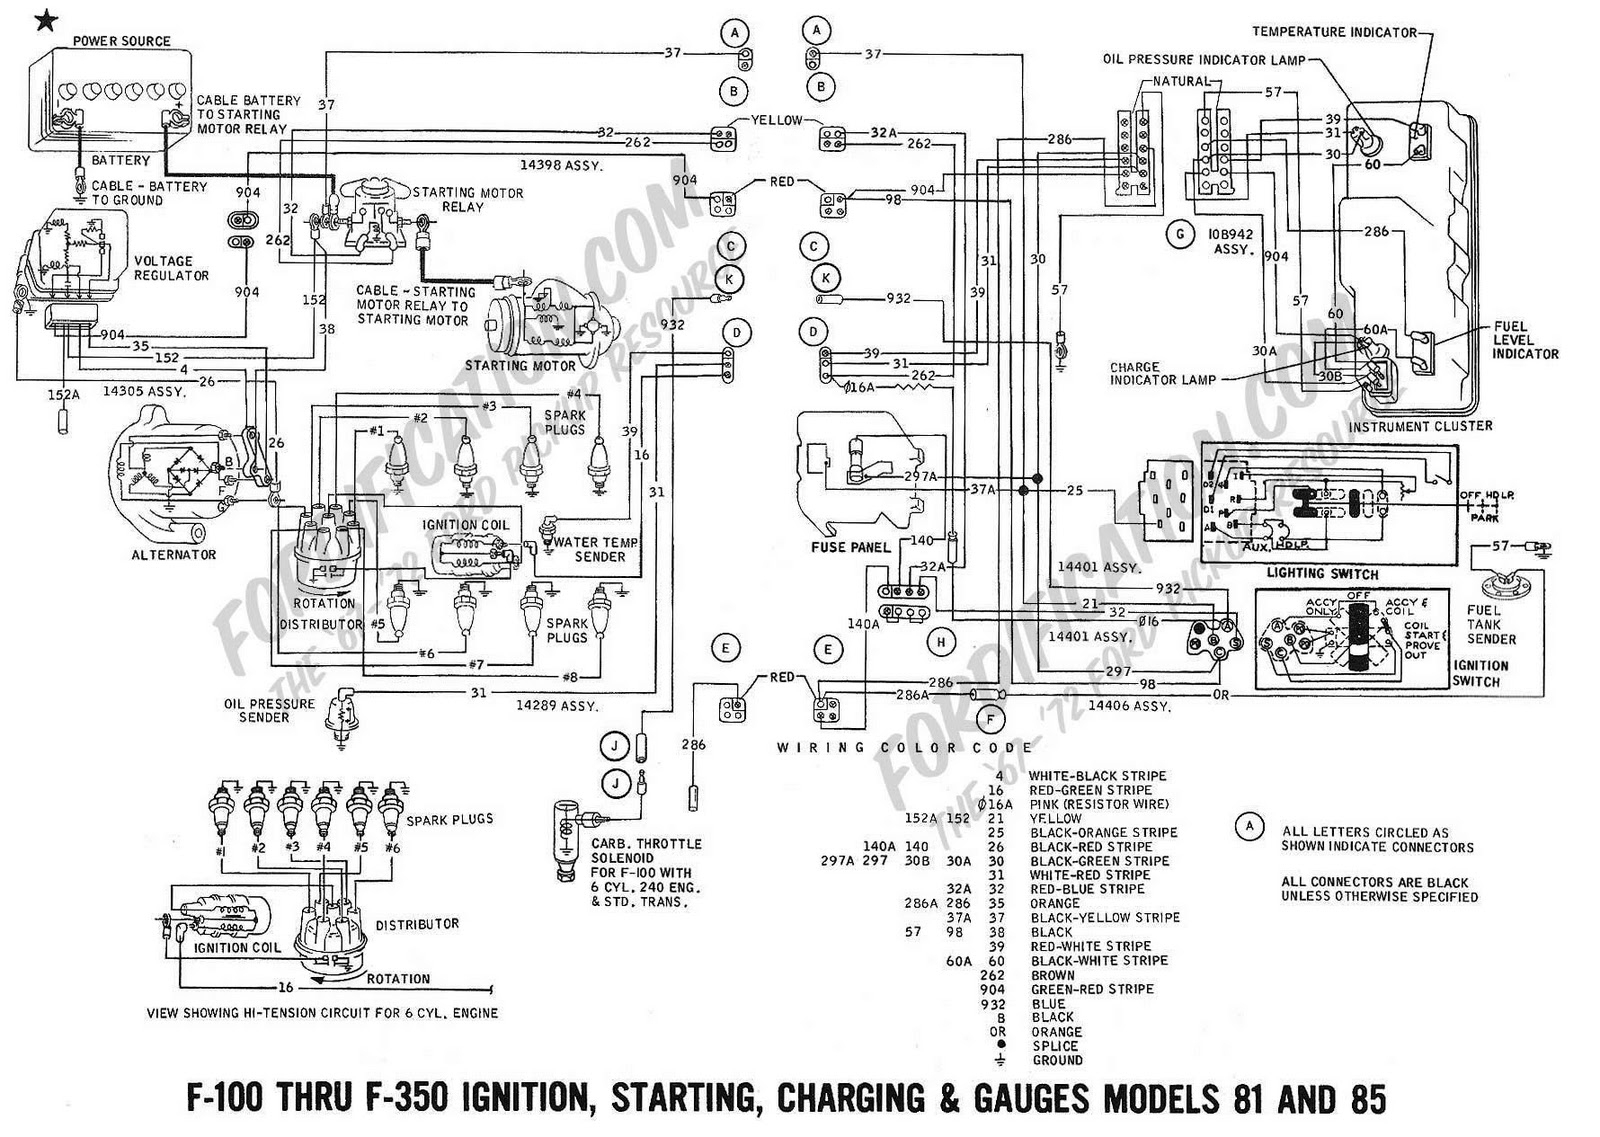 Ford Starter Solenoid Wiring Diagram - Cadician's Blog